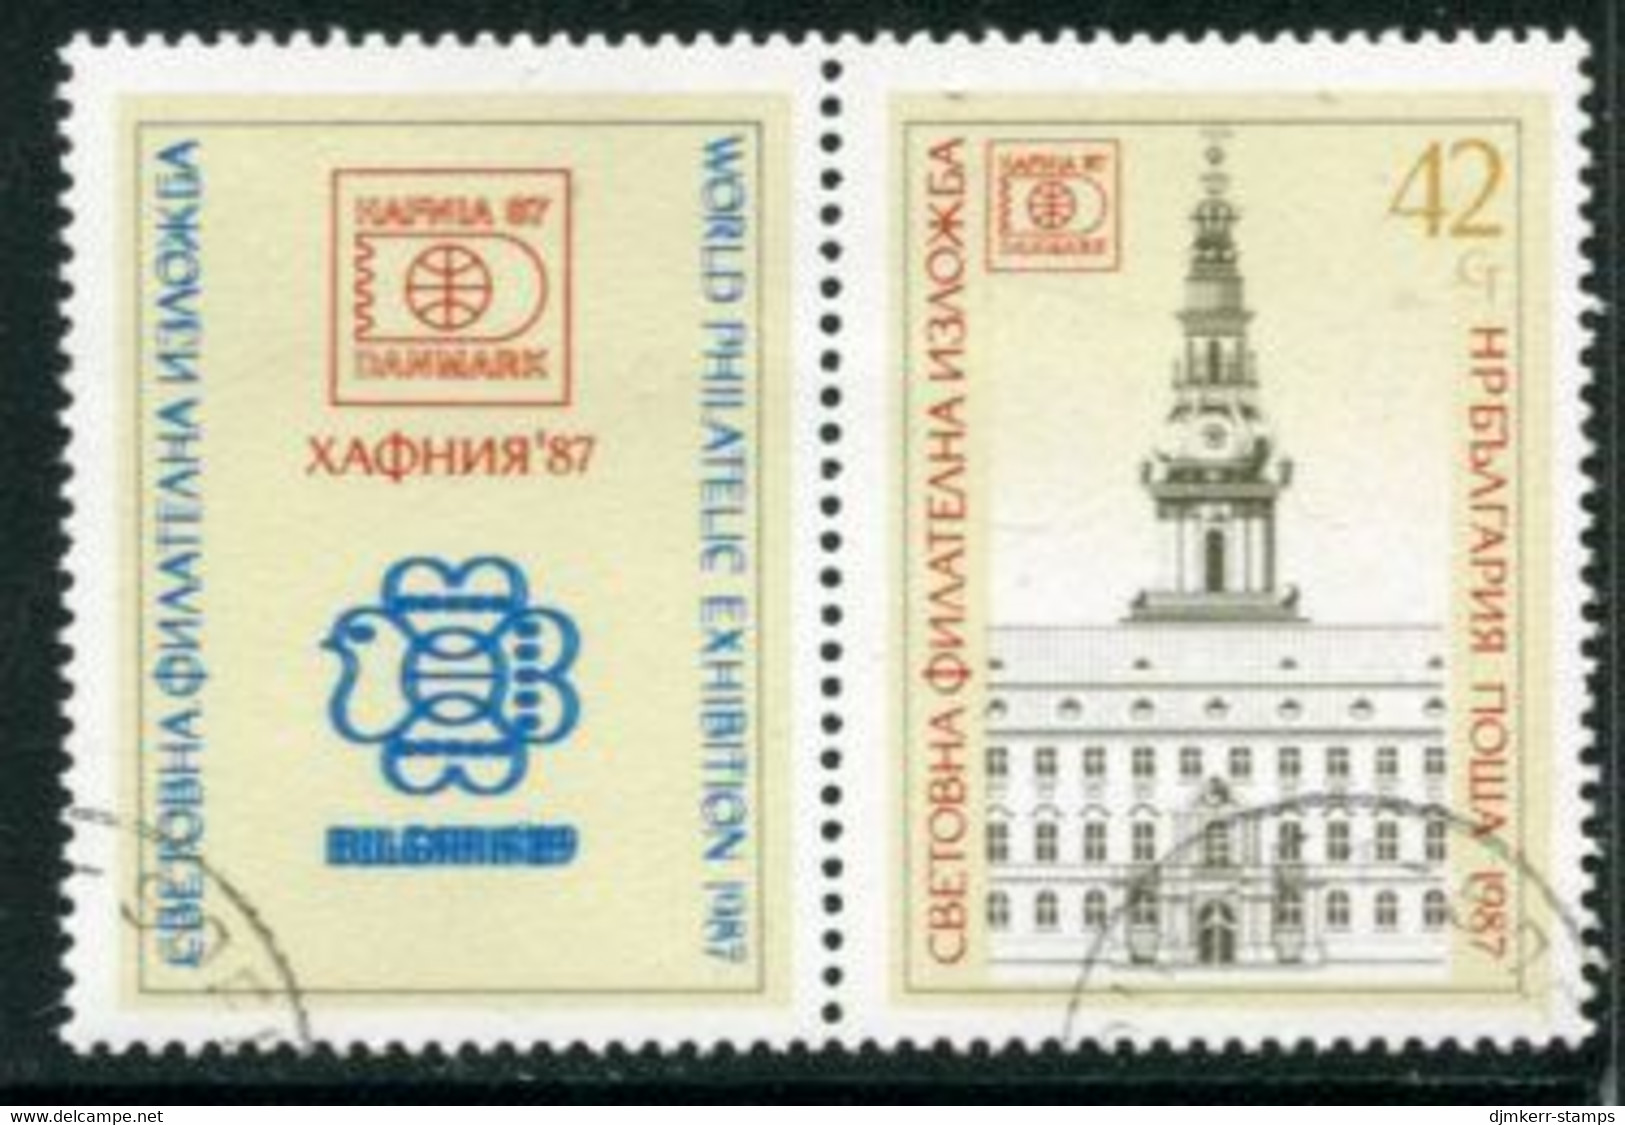 BULGARIA 1987 HAFNIA Stamp Exhibition Used.  Michel 3597 Zf - Gebruikt